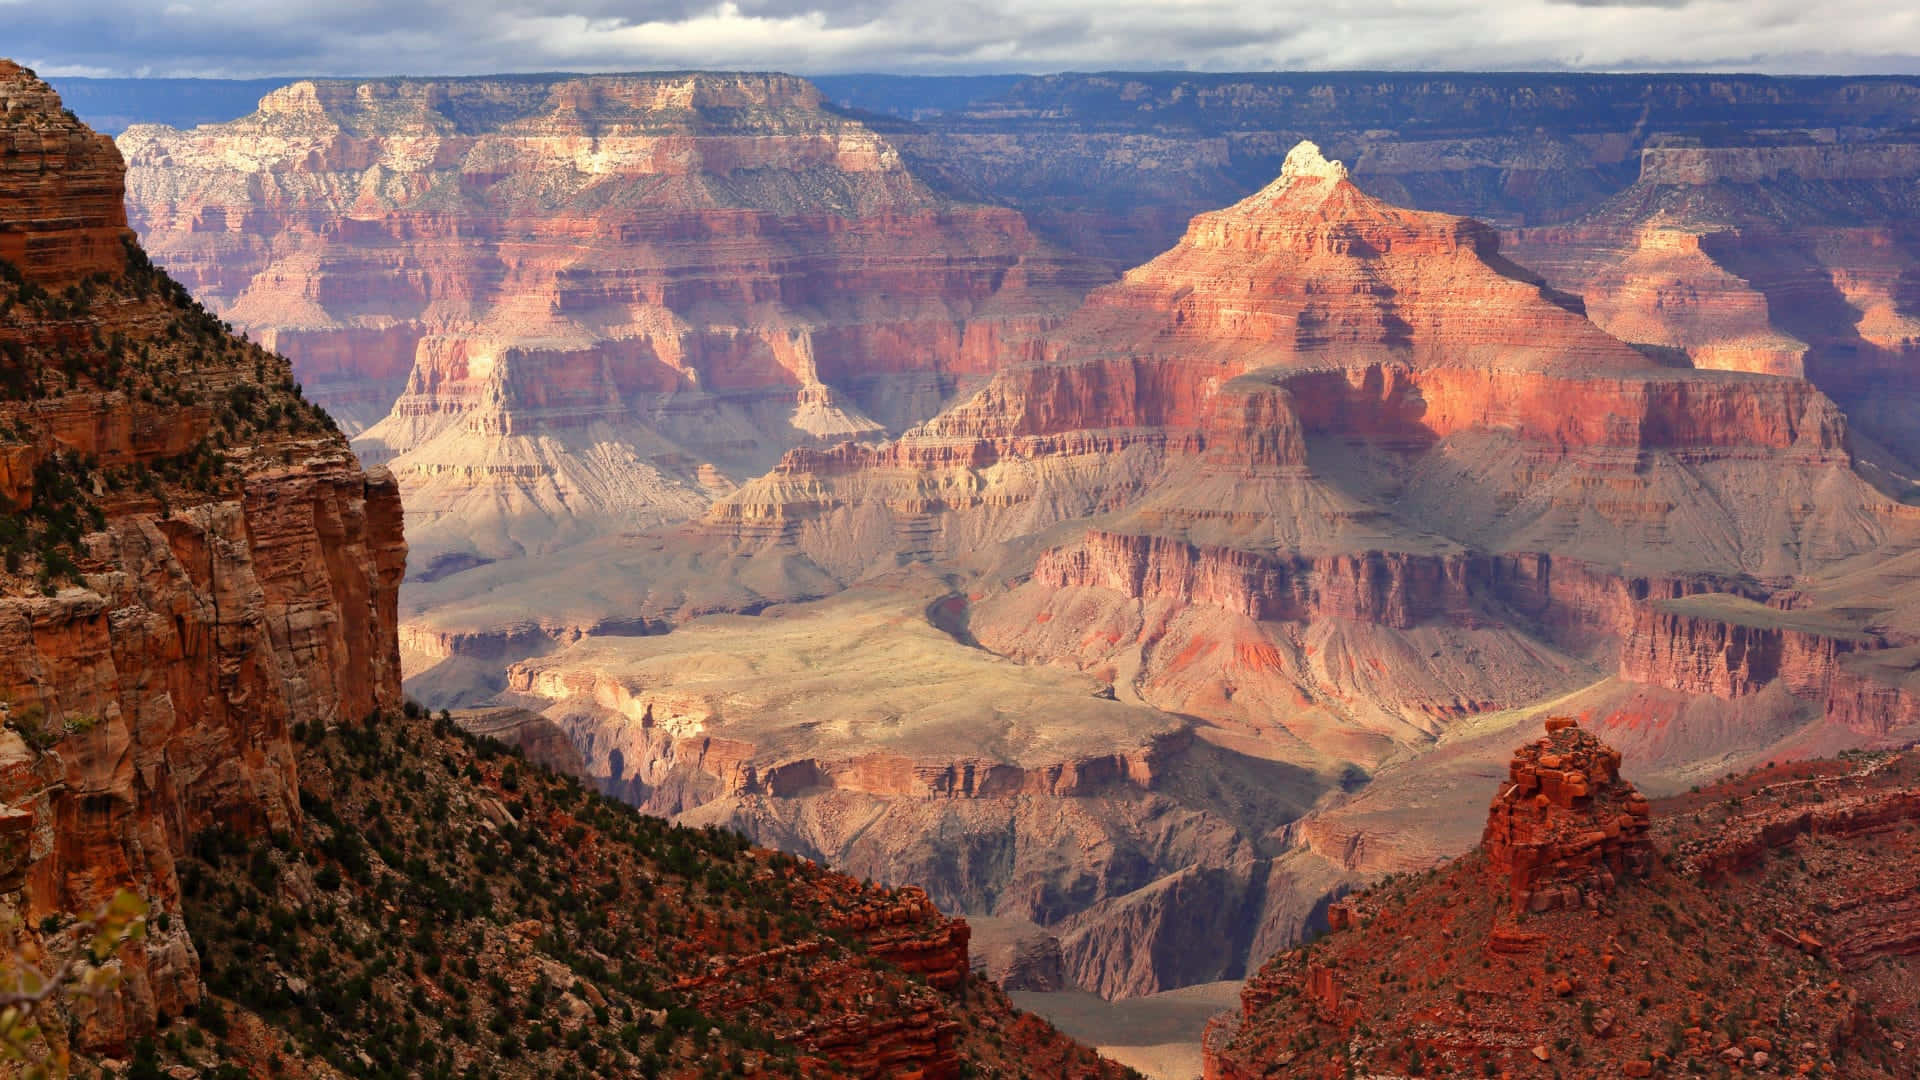 Explore the famous Grand Canyon in Arizona, USA